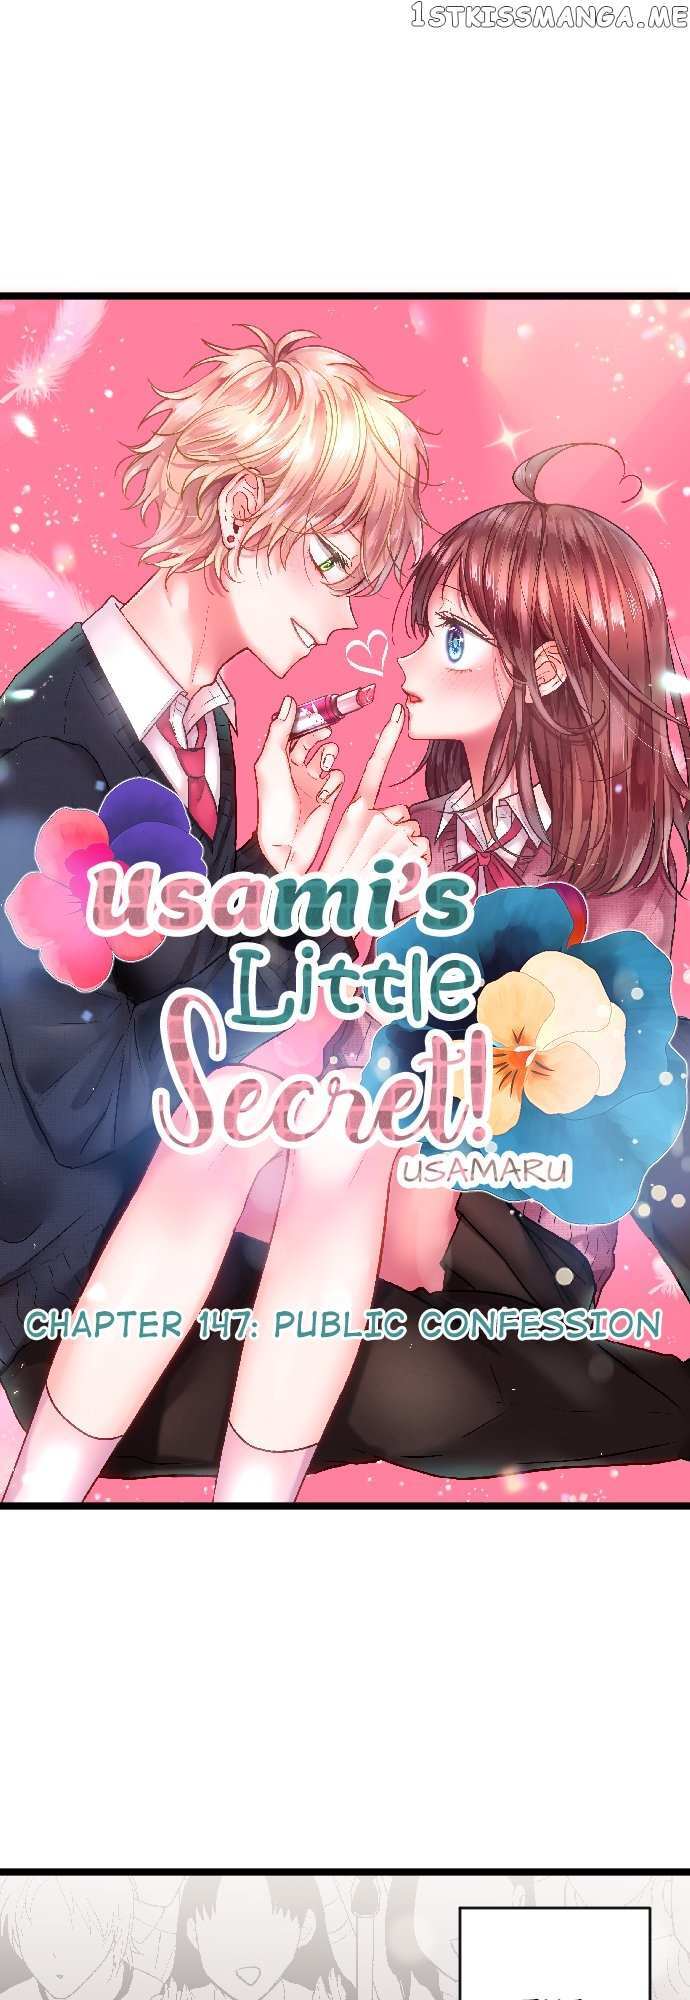 Usami-kun's secret! Chapter 147